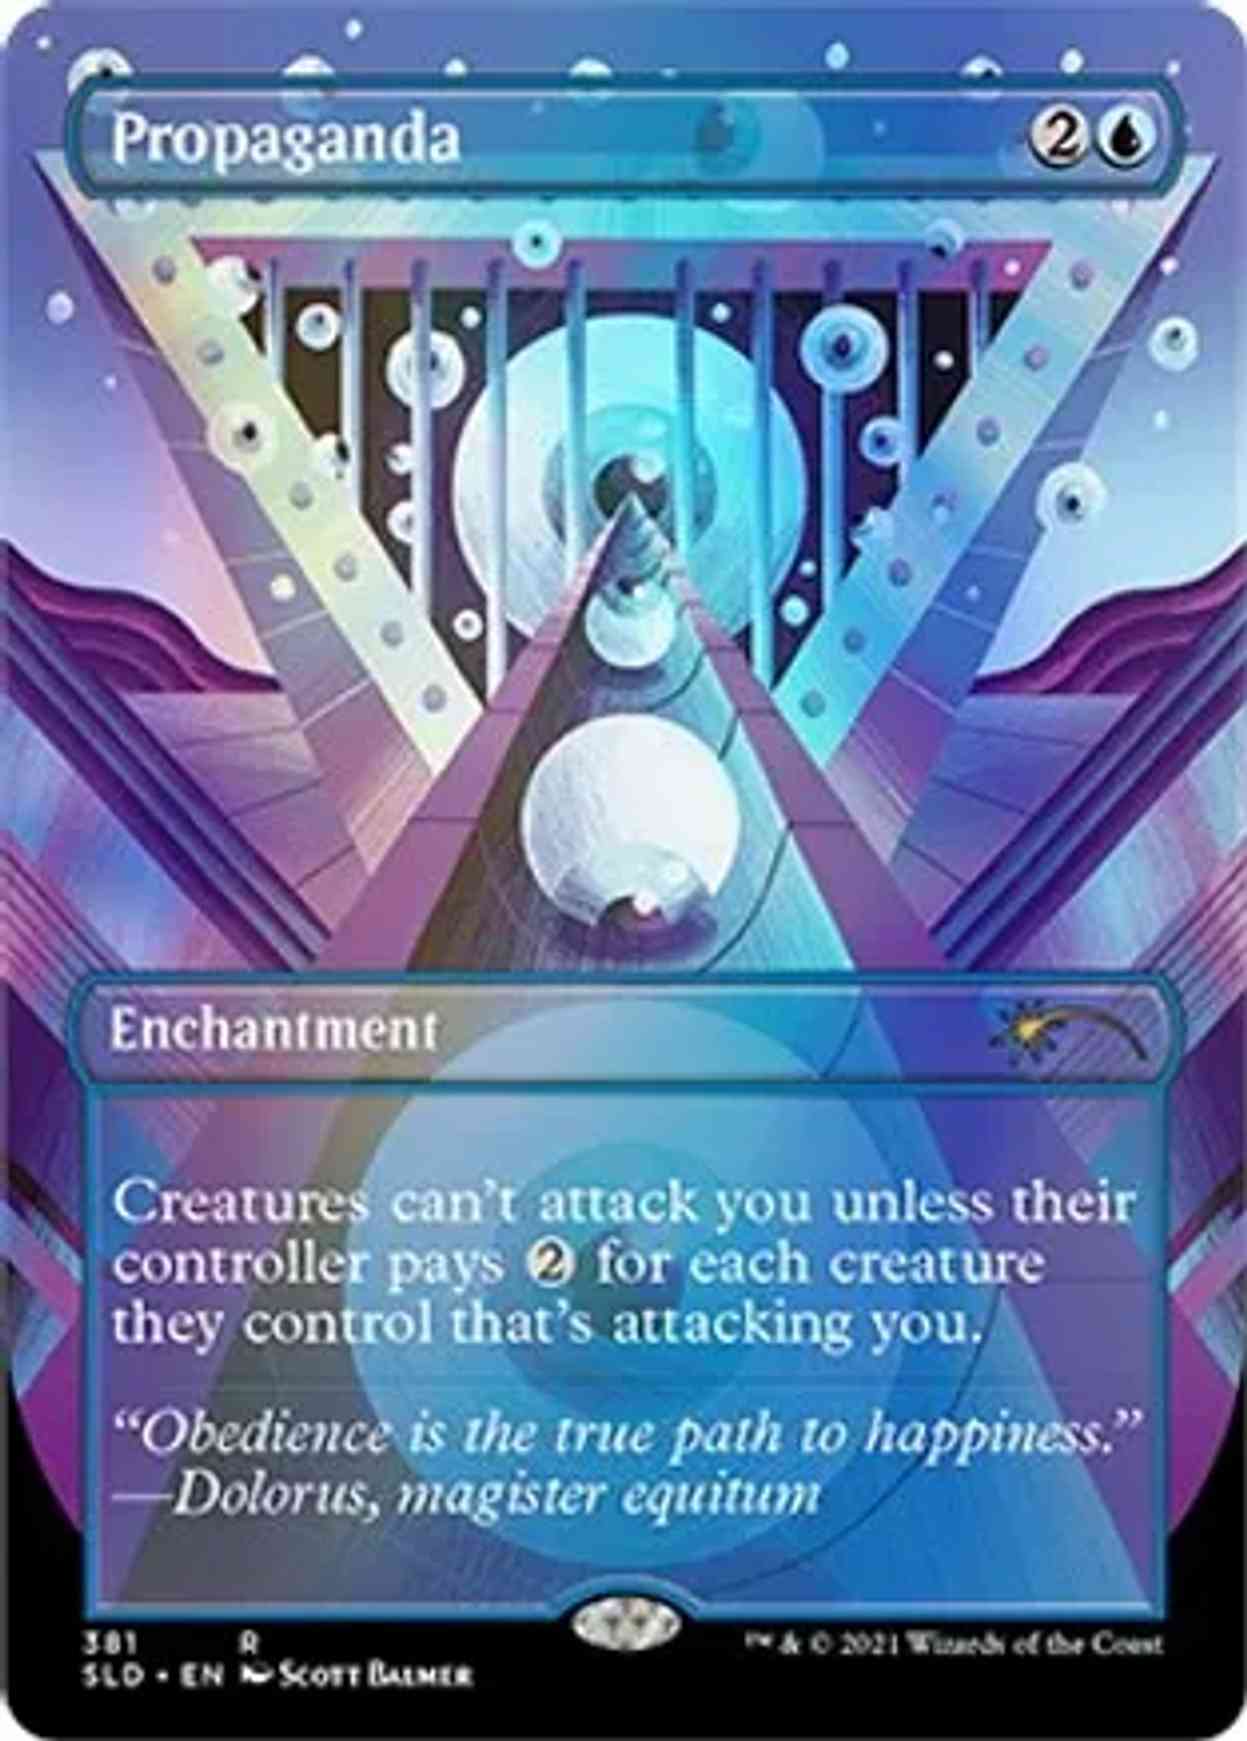 Propaganda magic card front